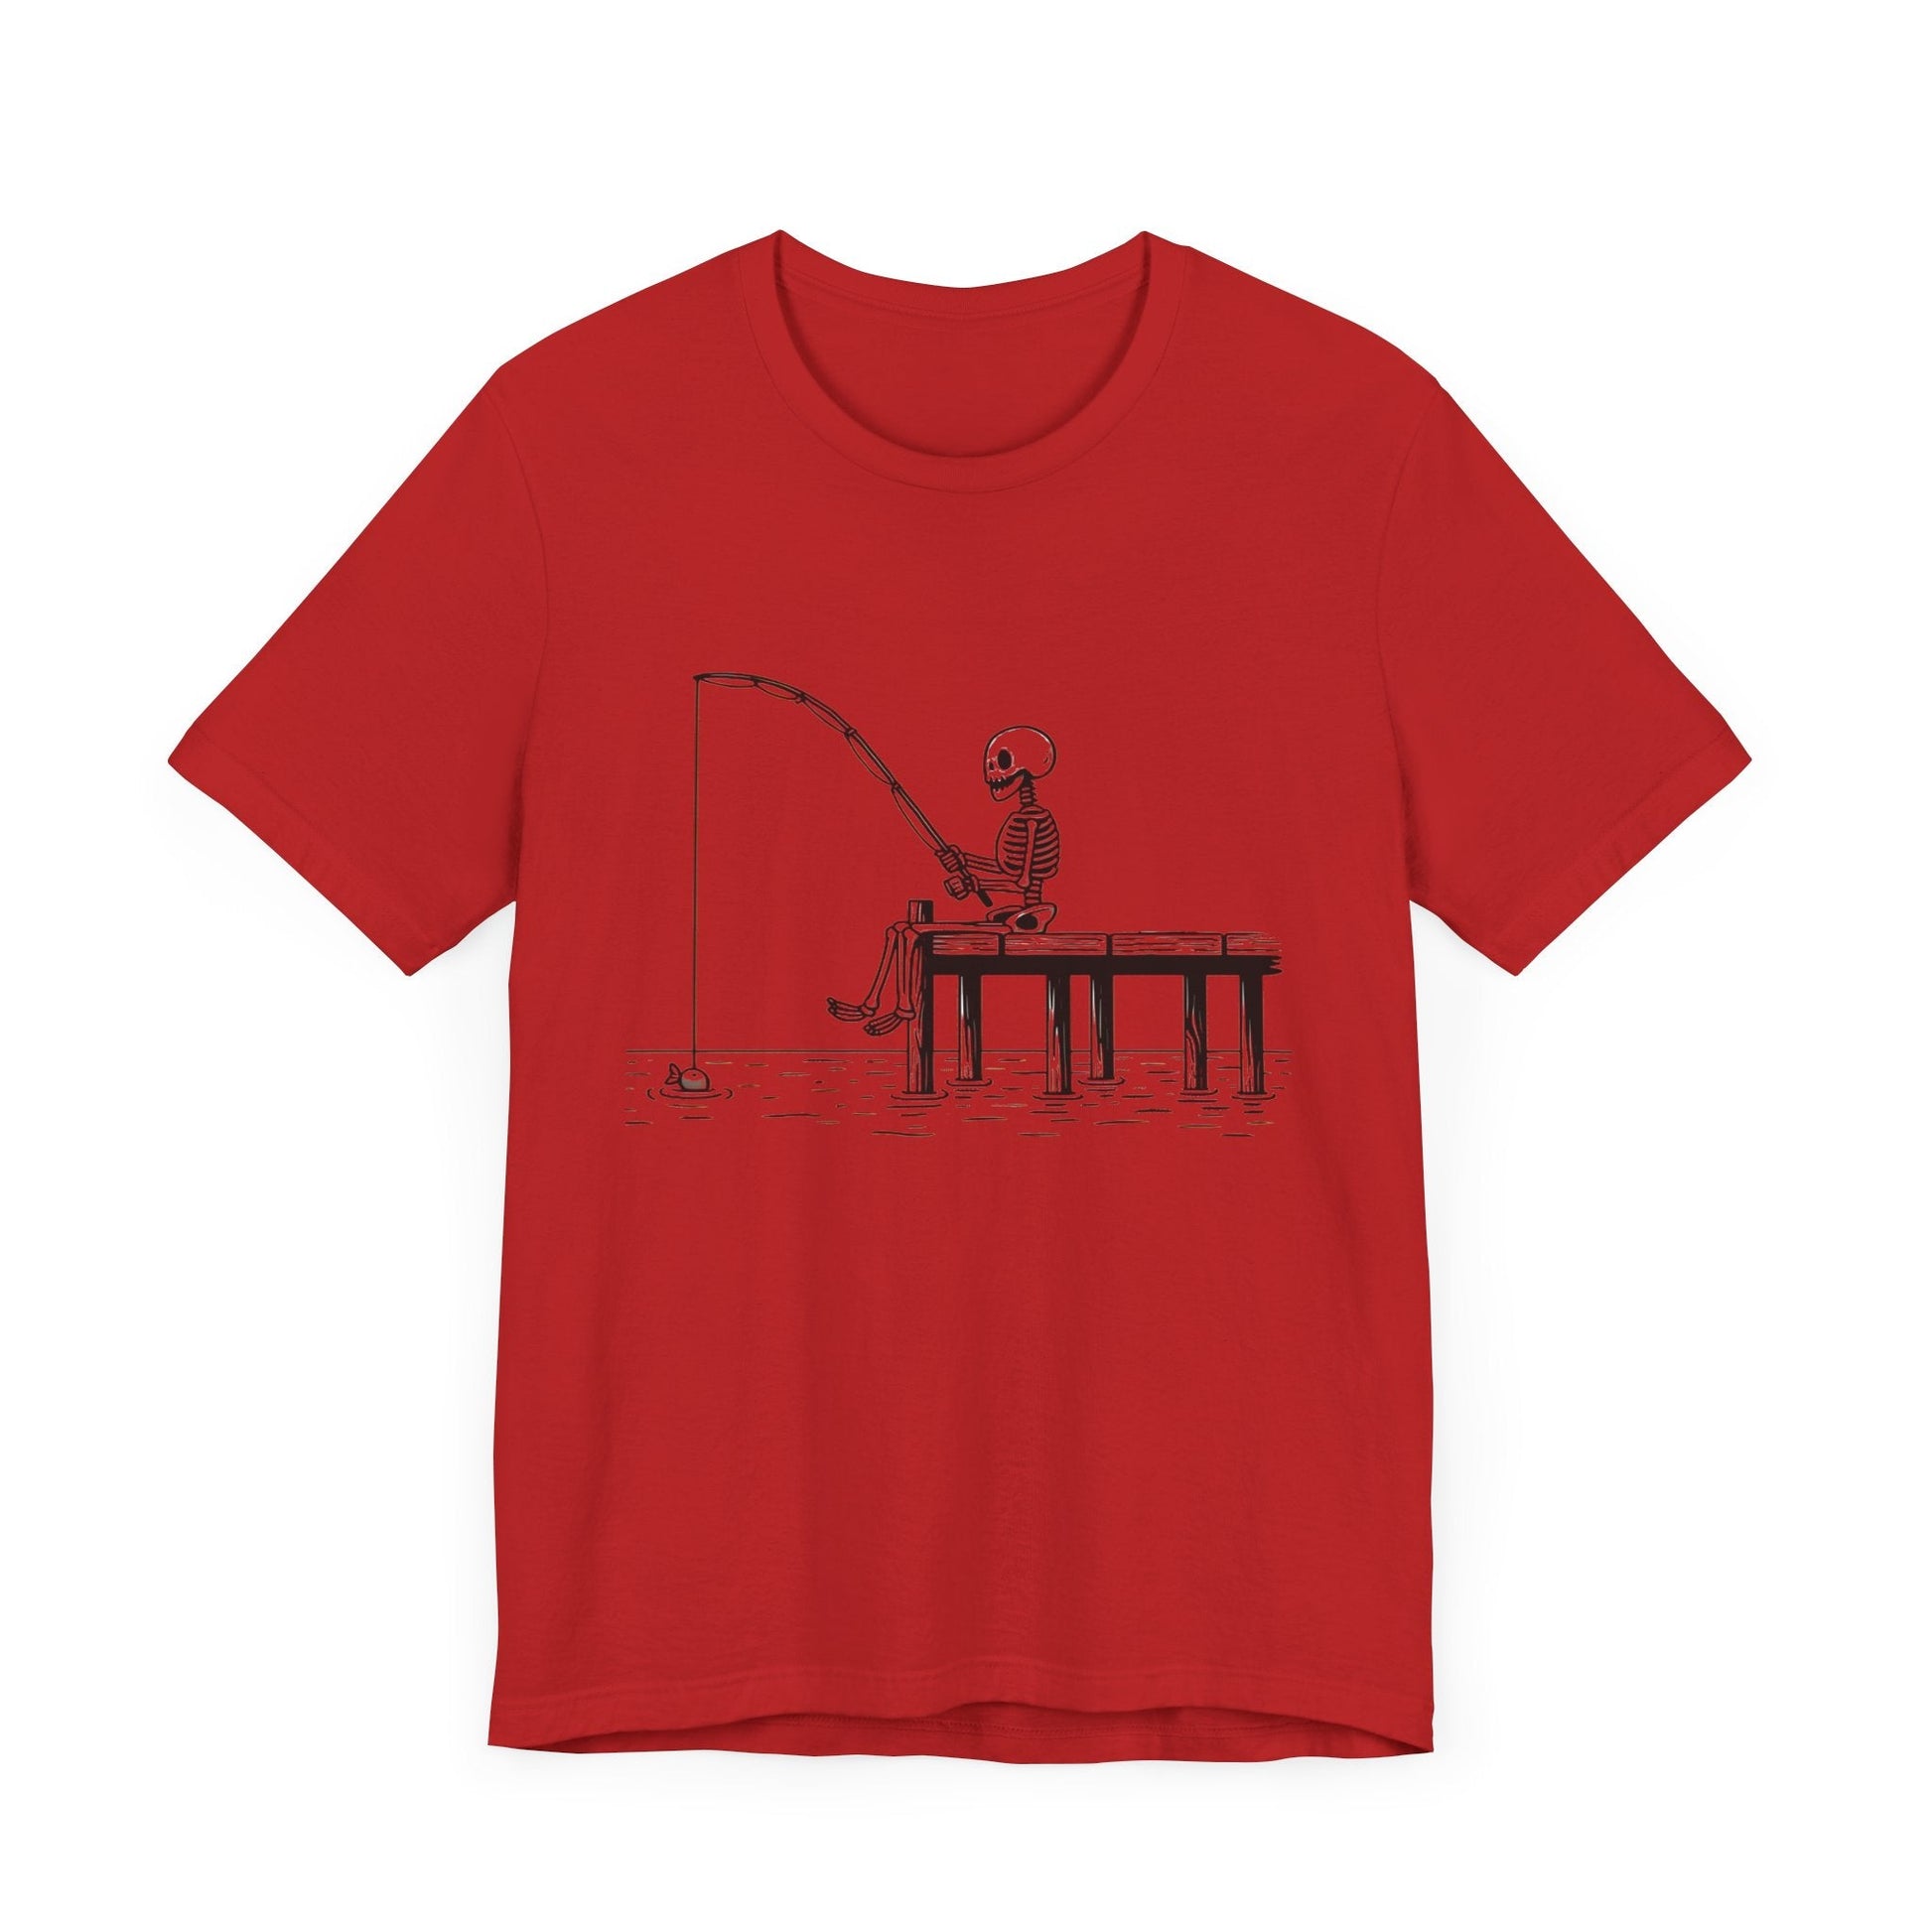 Skeleton Fishing Short Sleeve Tee ShirtT - ShirtVTZdesignsRedXSclothingCottonCrew neck